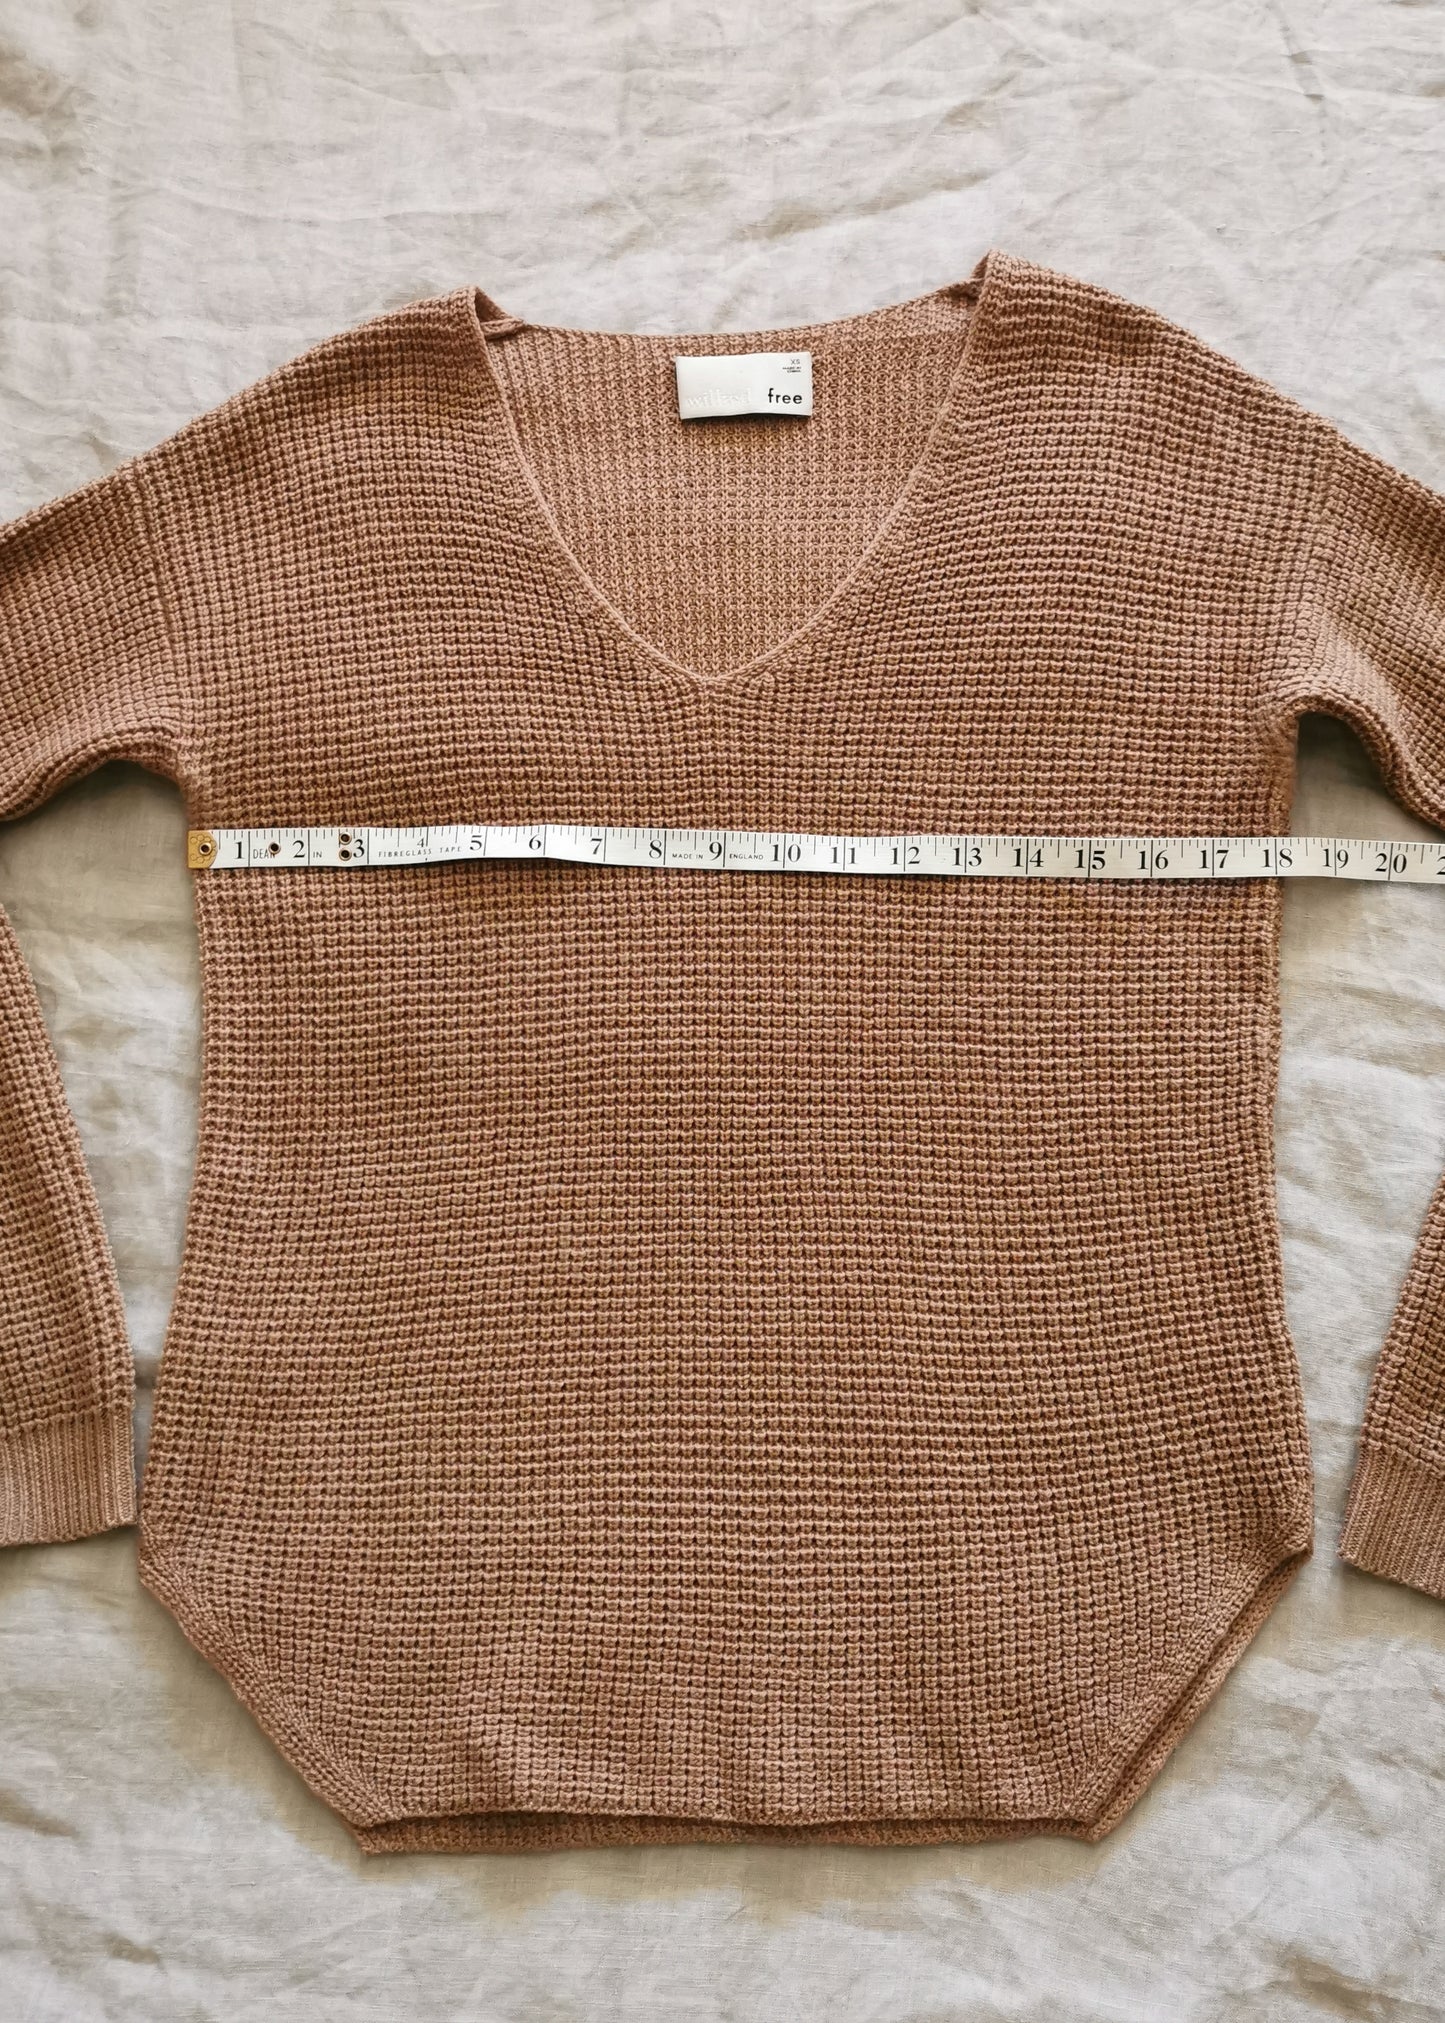 Wilfred Free Merino Wool Wolter Sweater (XS)